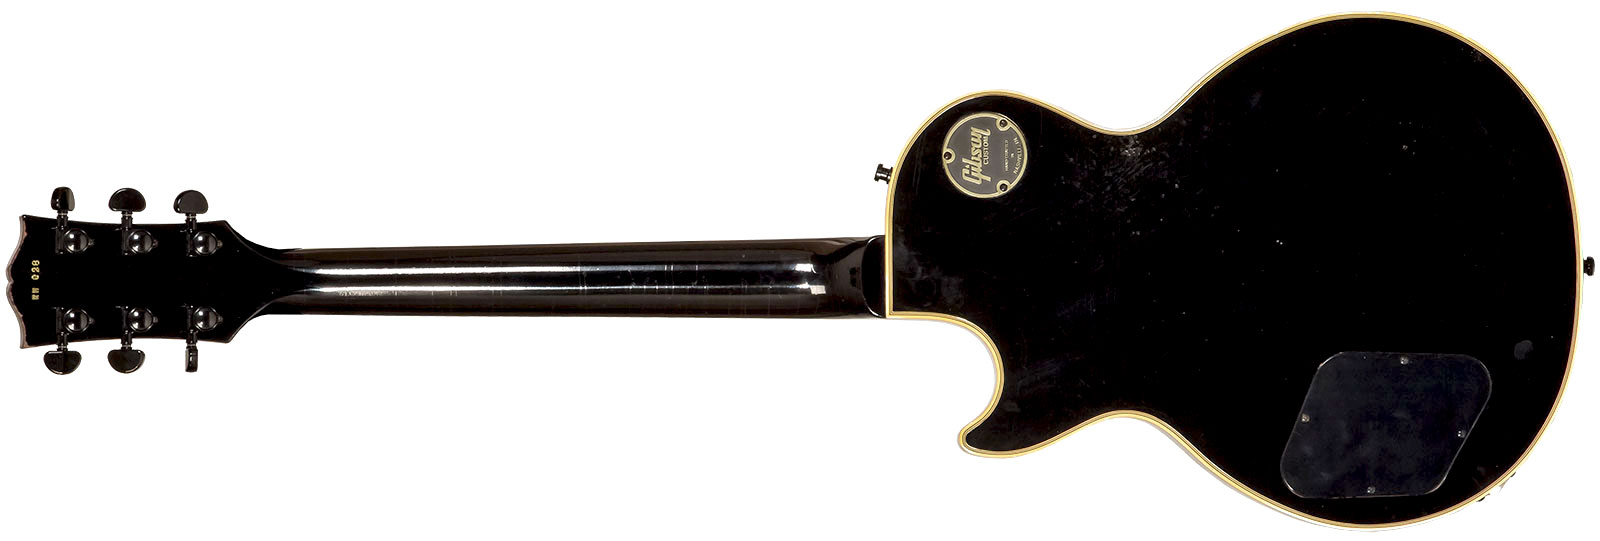 Gibson Custom Shop Kirk Hammett Les Paul Custom 1989 2h Ht Eb #kh28 - Murphy Lab Aged Ebony - Signature electric guitar - Variation 1